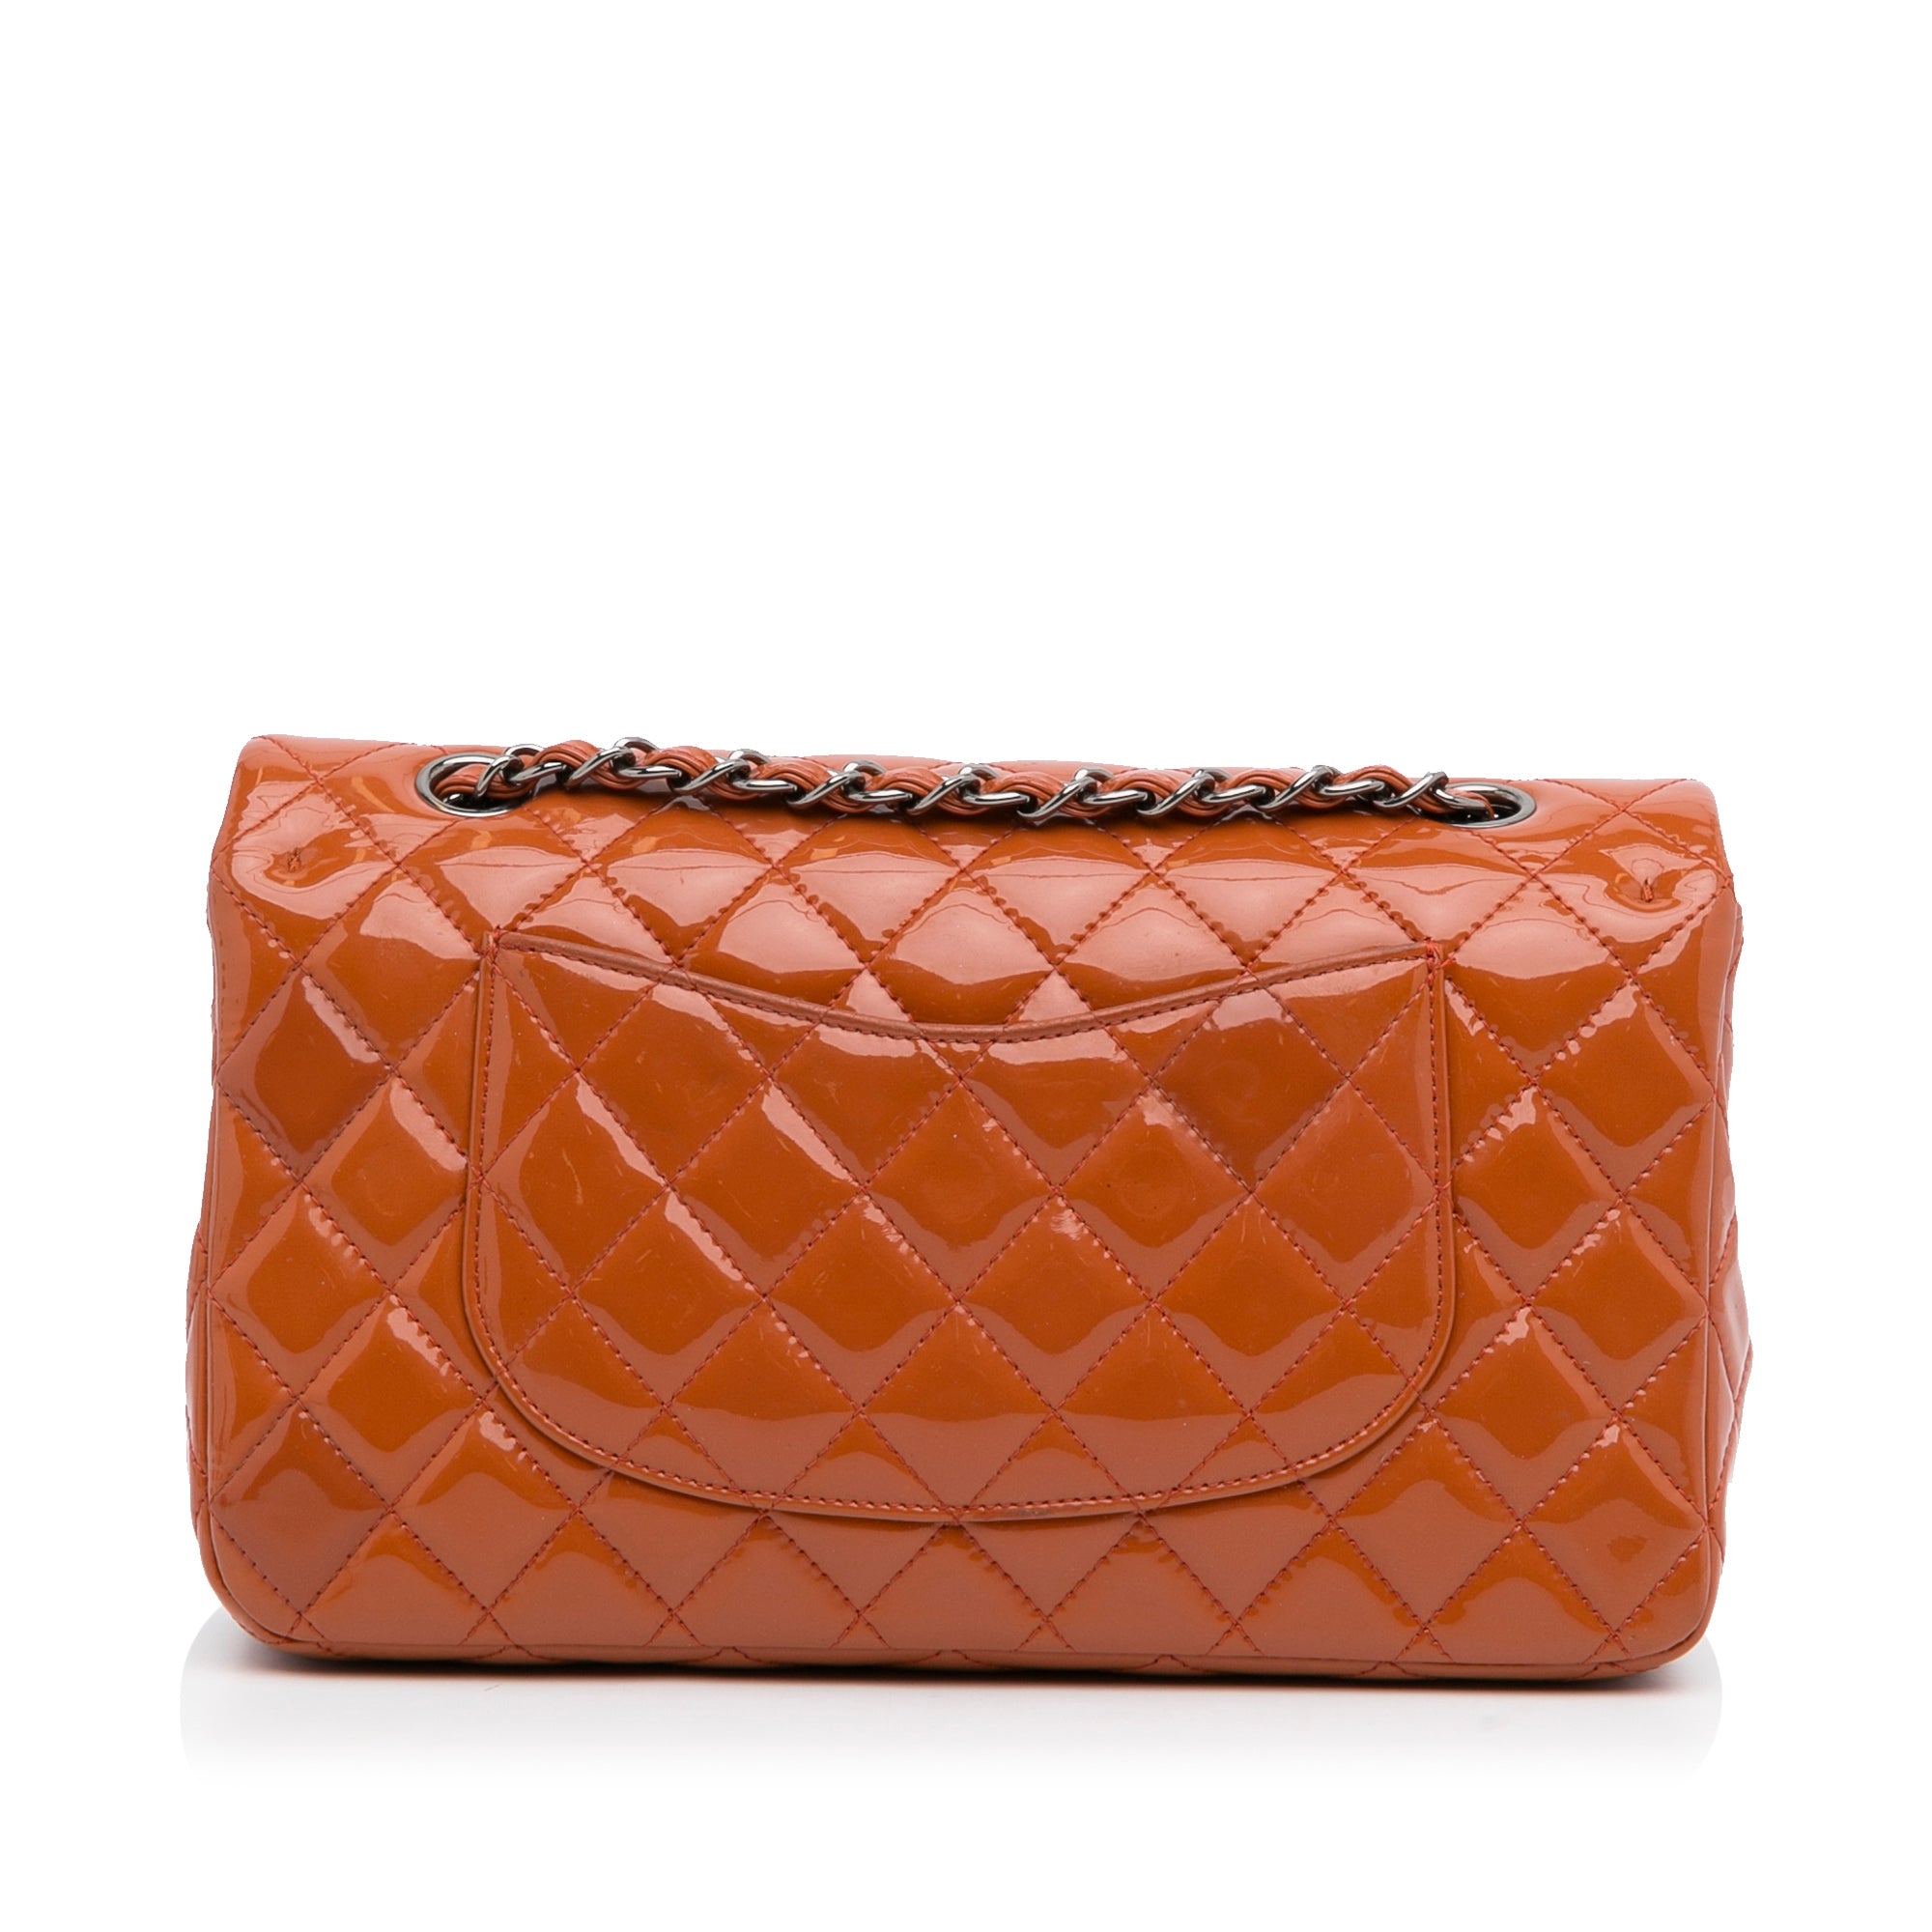 Chanel Medium Double Flap Calfskin Leather Shoulder Bag